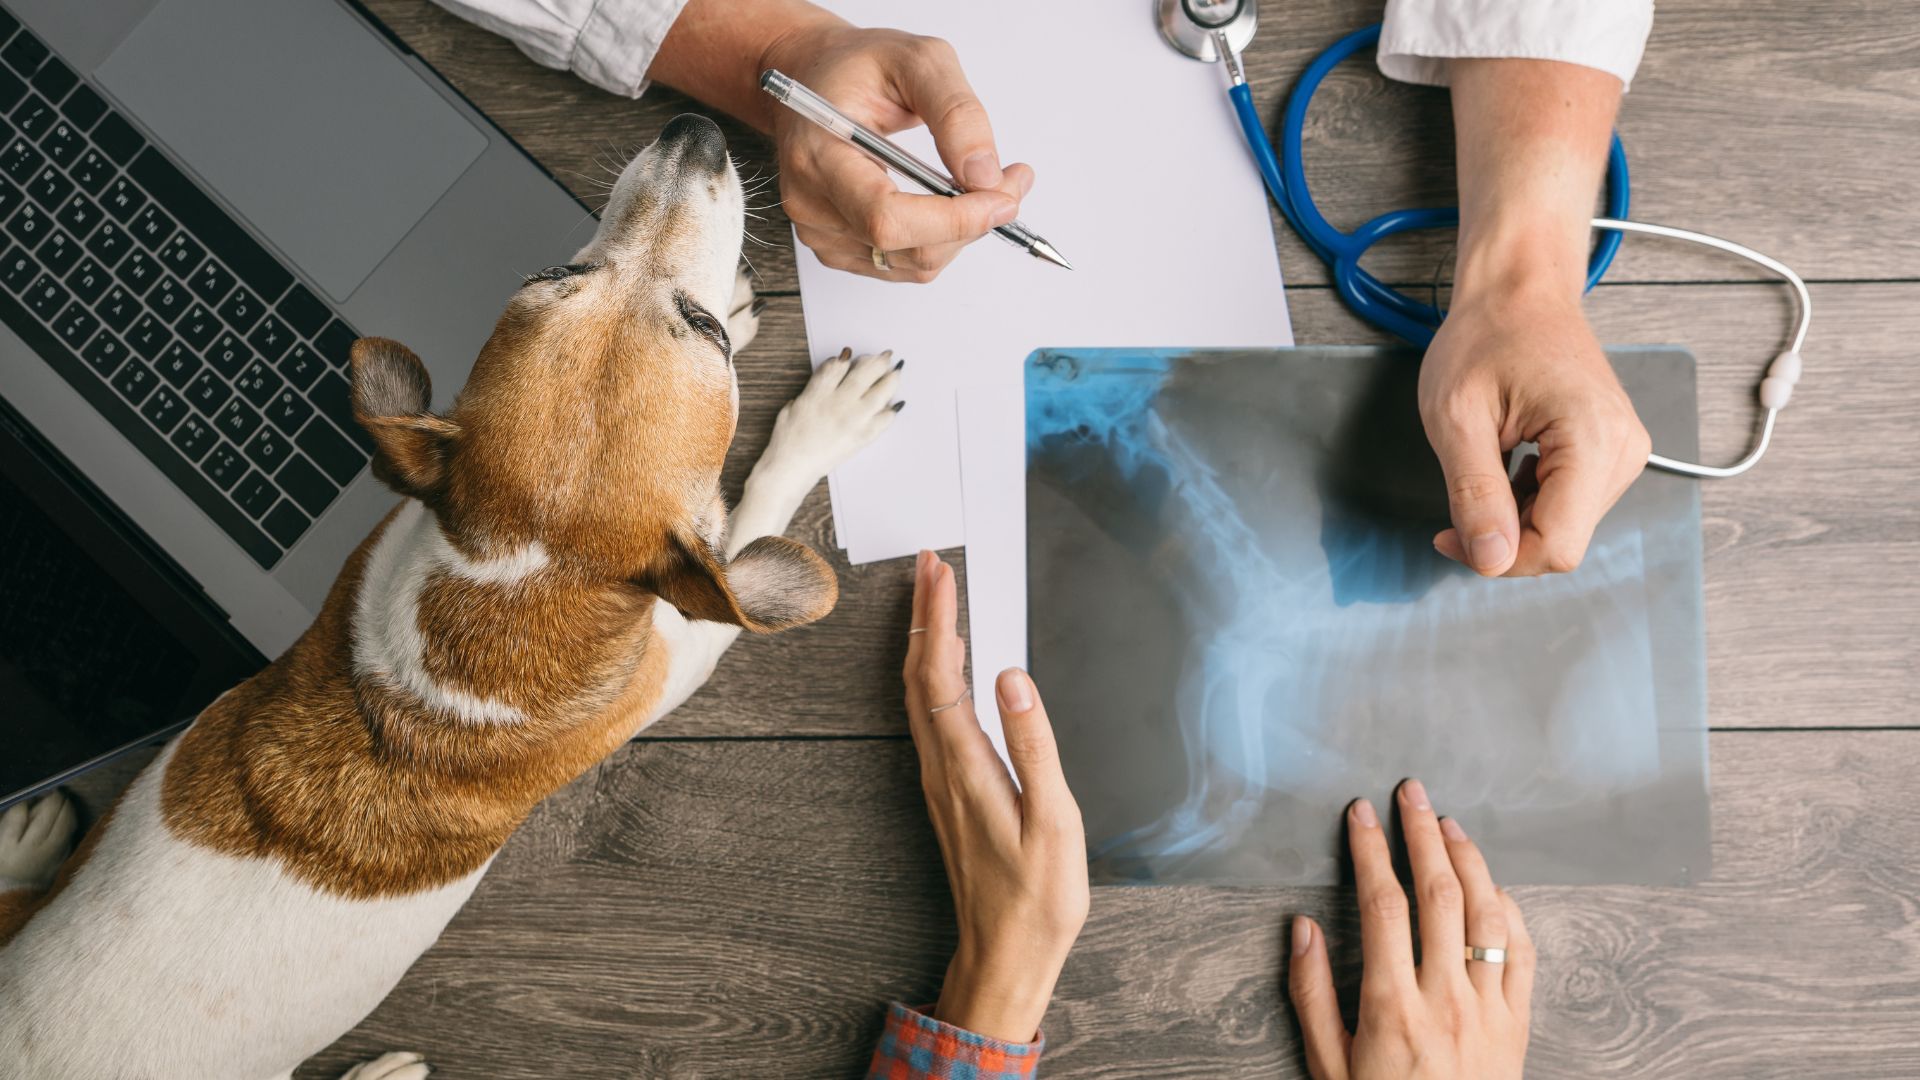 a dog looking at x-ray